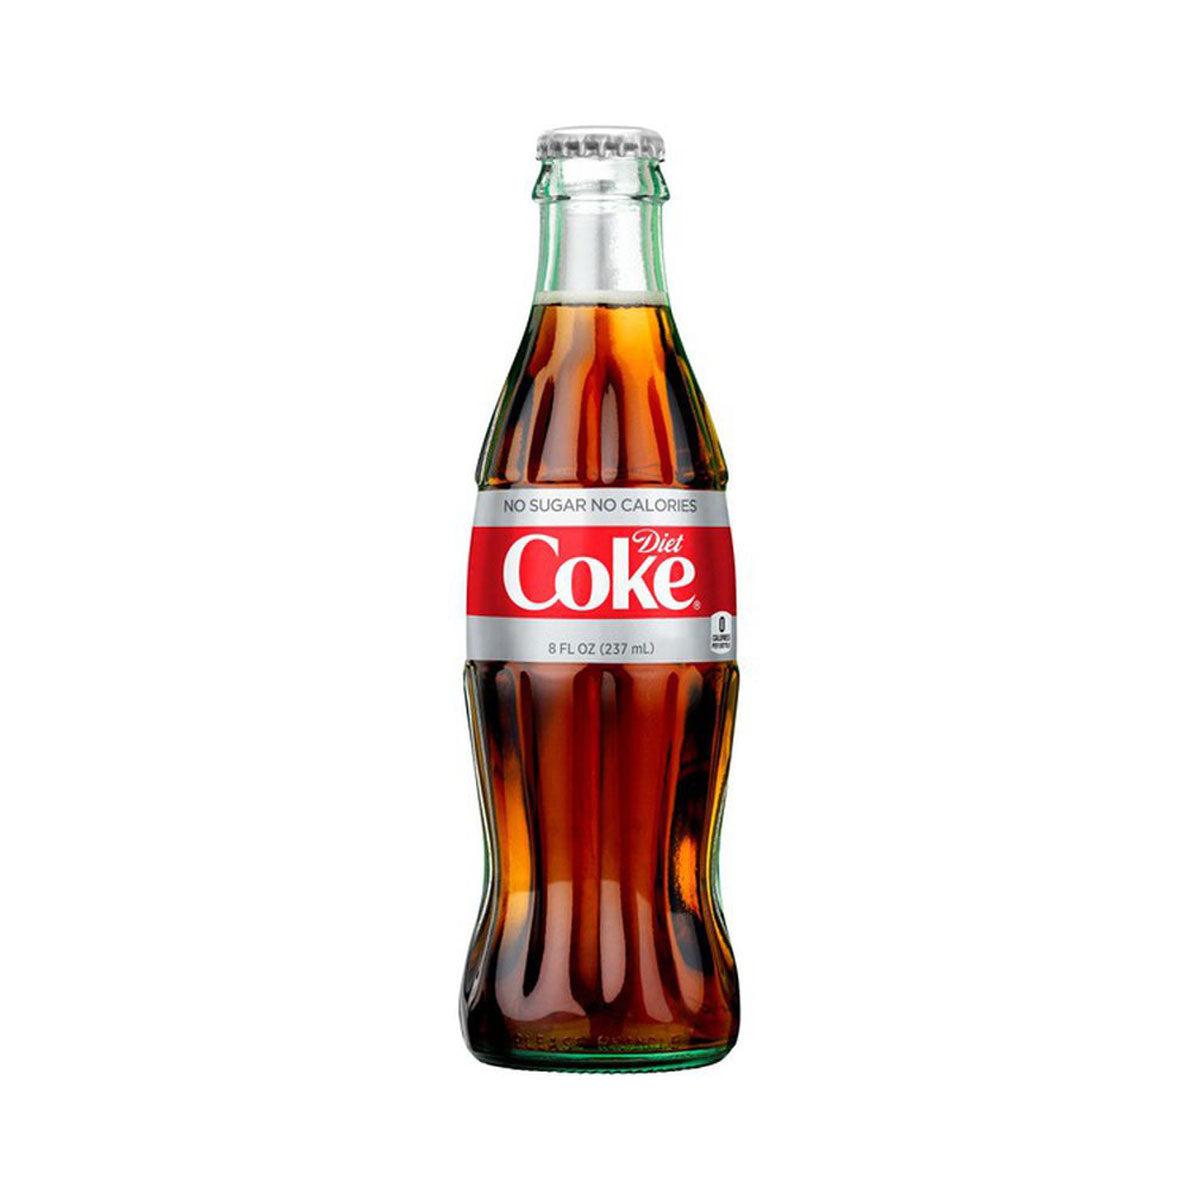 Coca-Cola Diet Coke Glass Bottle 8 OZ